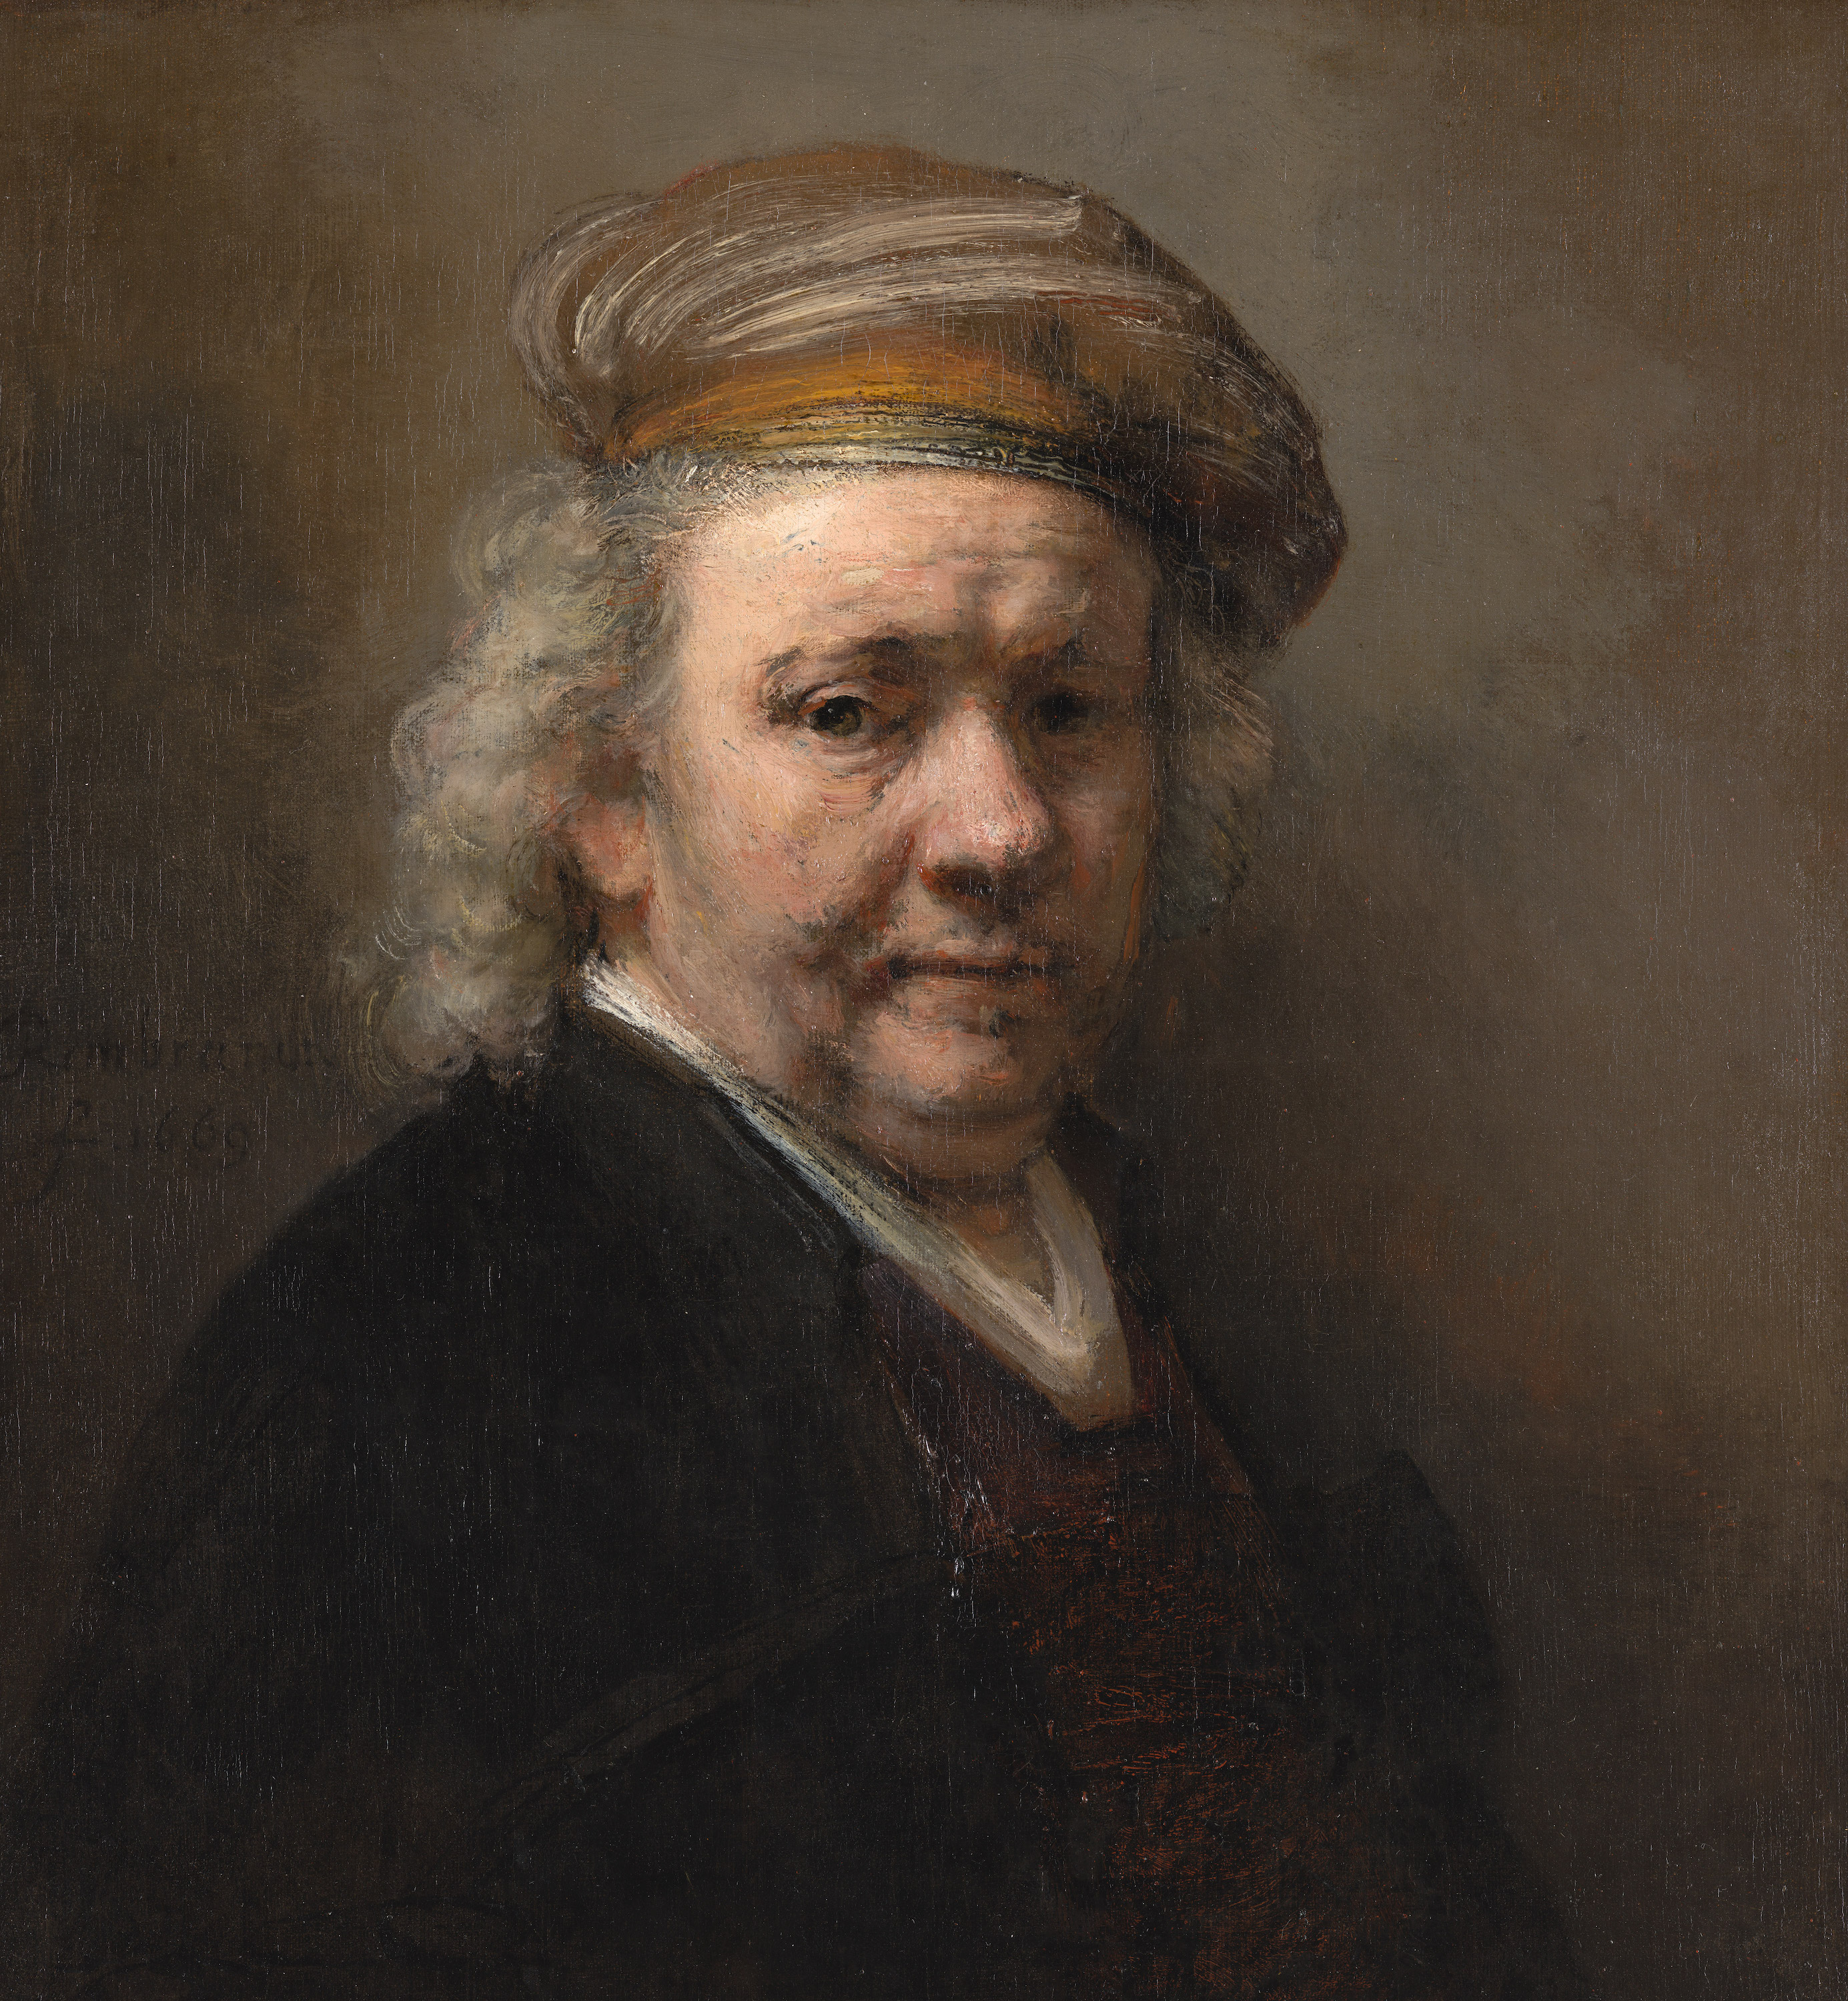 Self-Portrait by Rembrandt van Rijn - 1669 - 65.4 x 60.2 cm Mauritshuis, The Hague